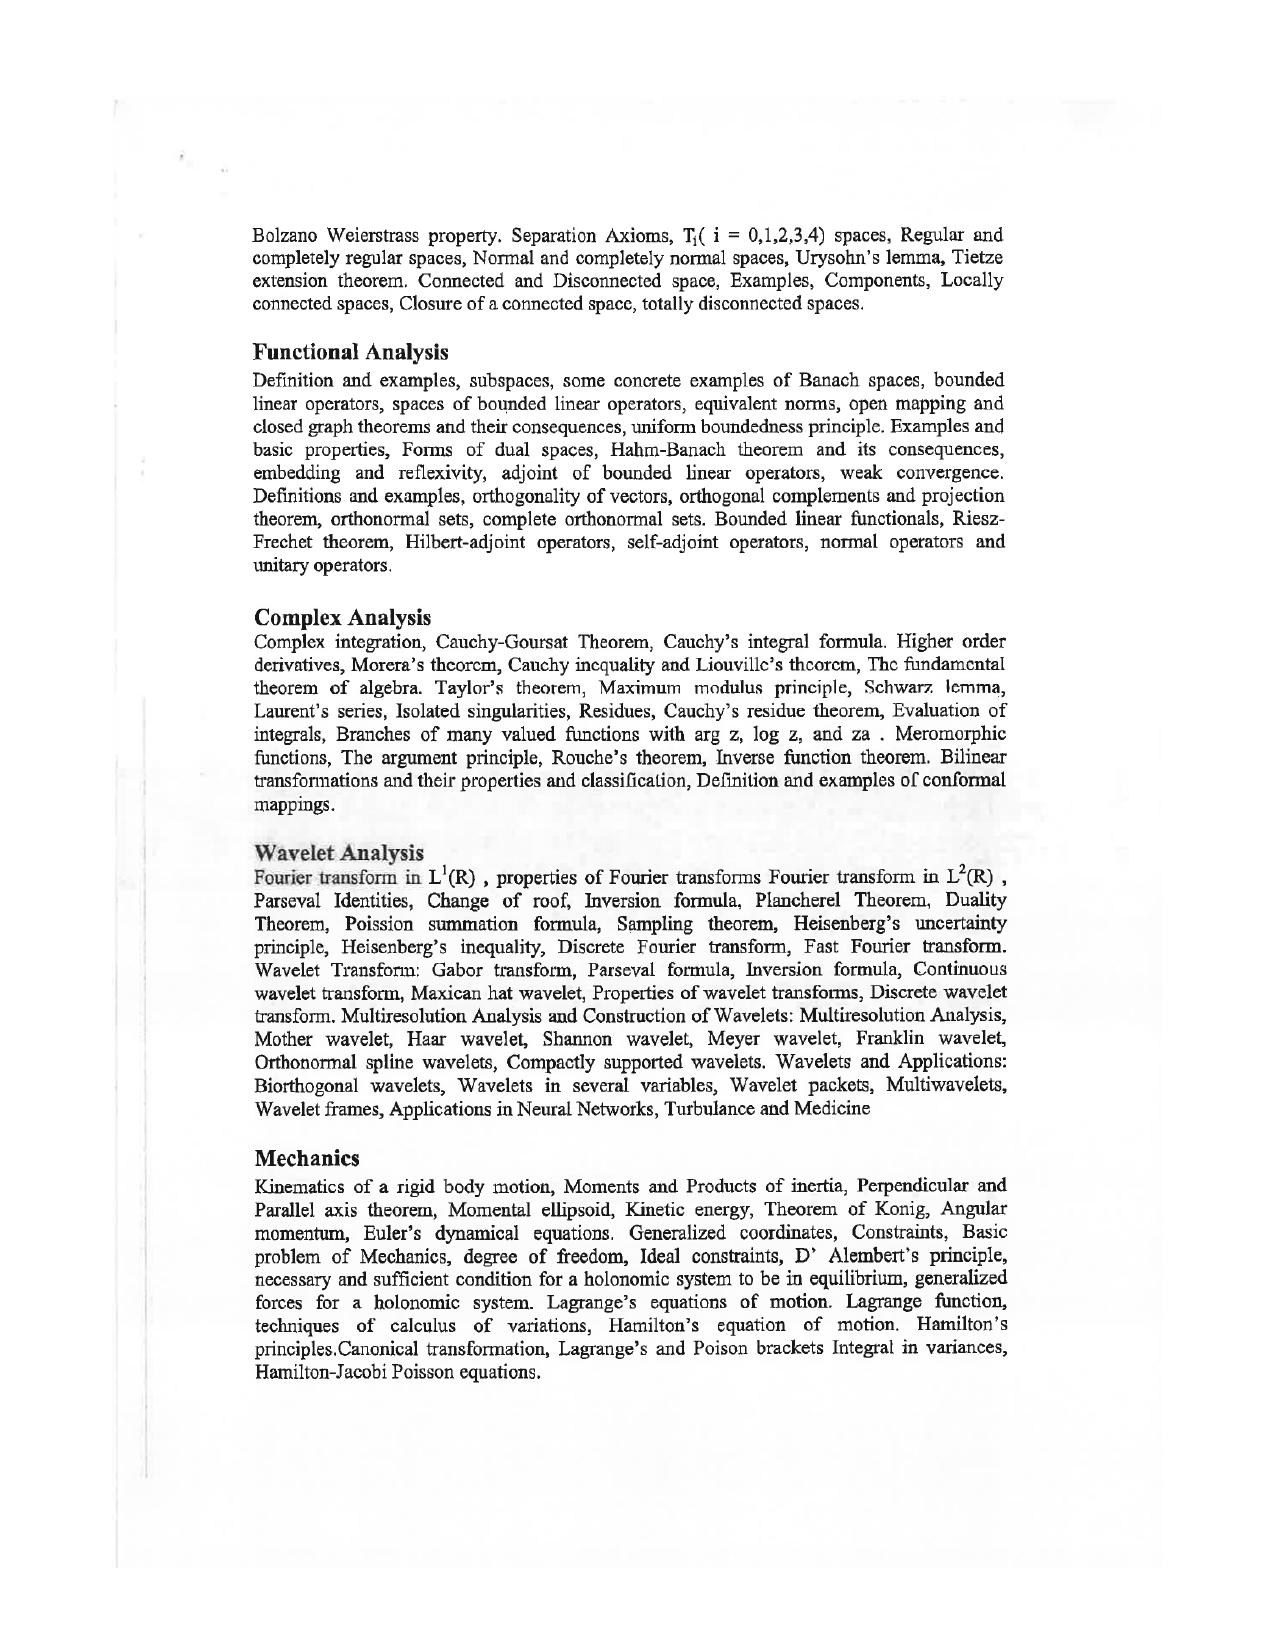 JMI Entrance Exam FACULTY OF NATURAL SCIENCES Syllabus - Page 37